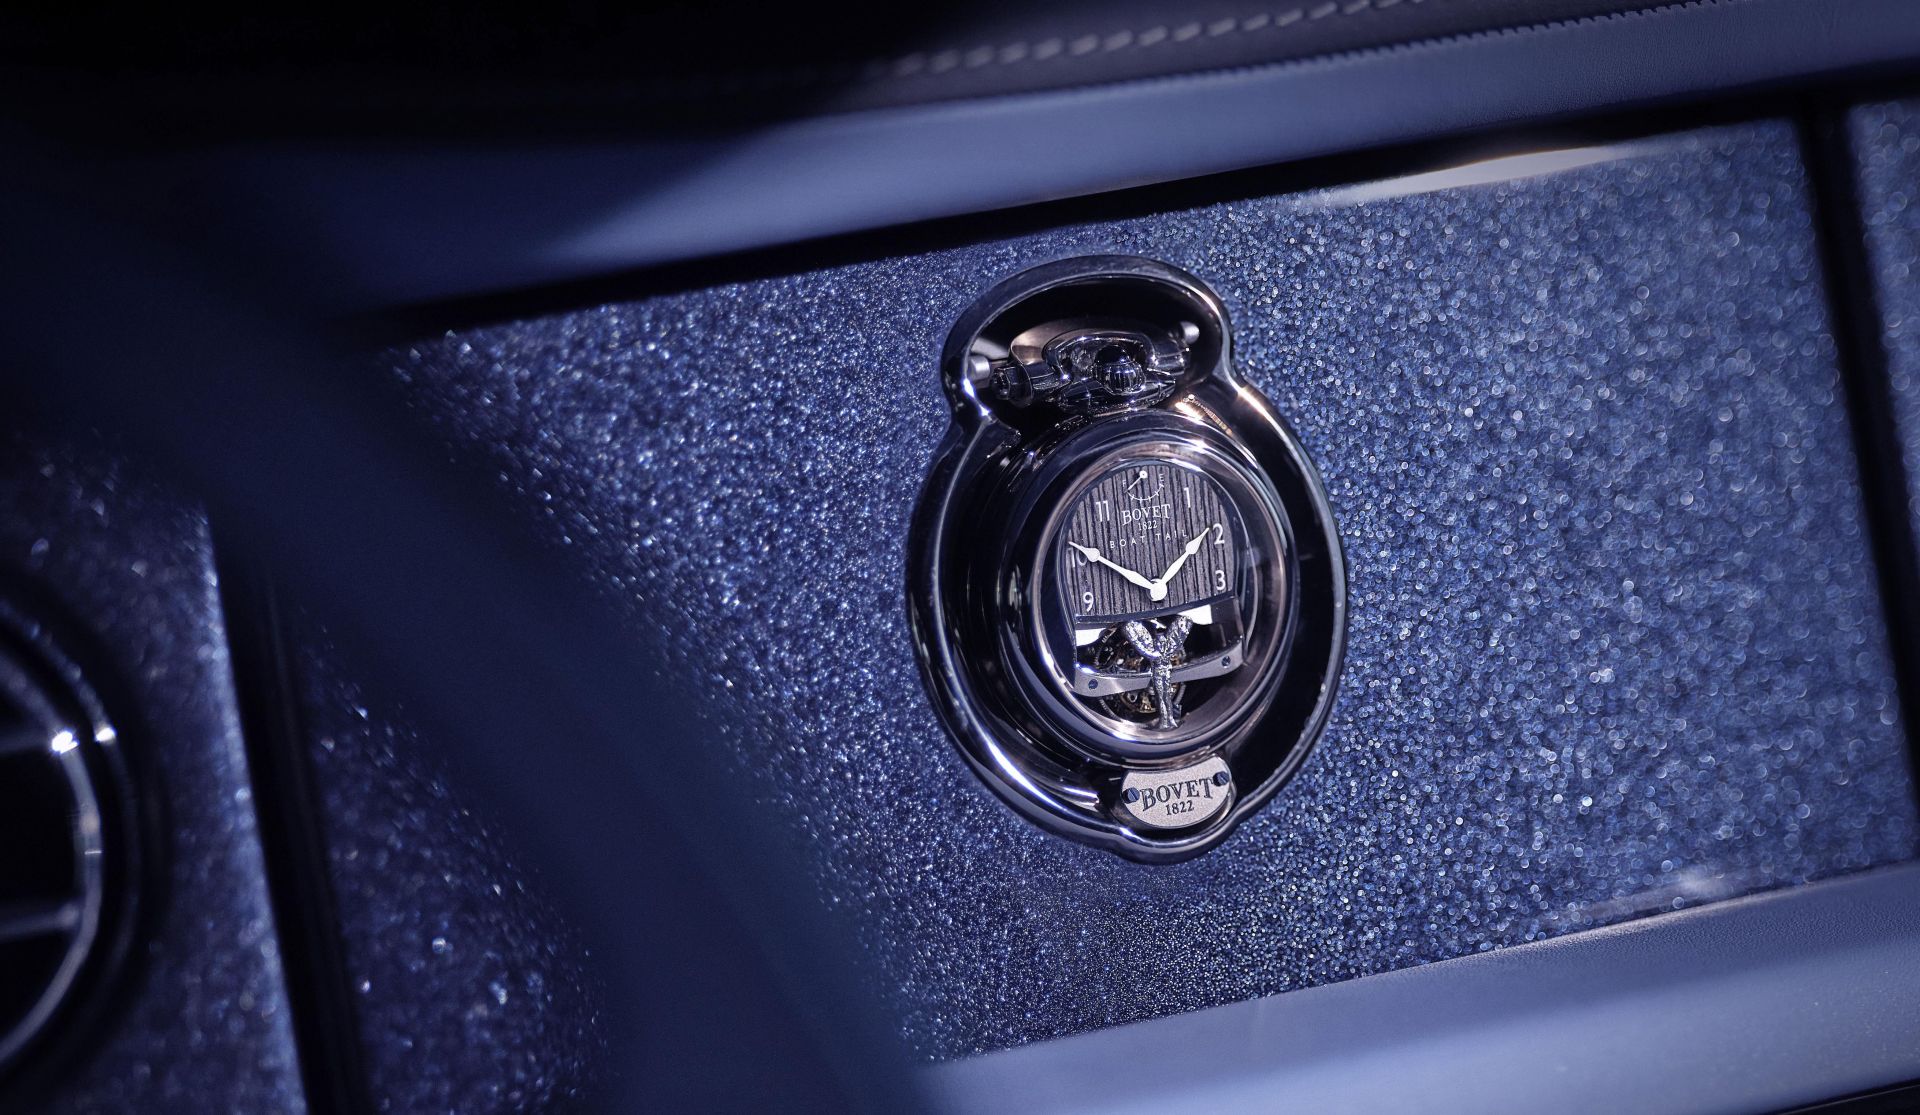 Rolls Royce Bovet 1822 timepiece 140